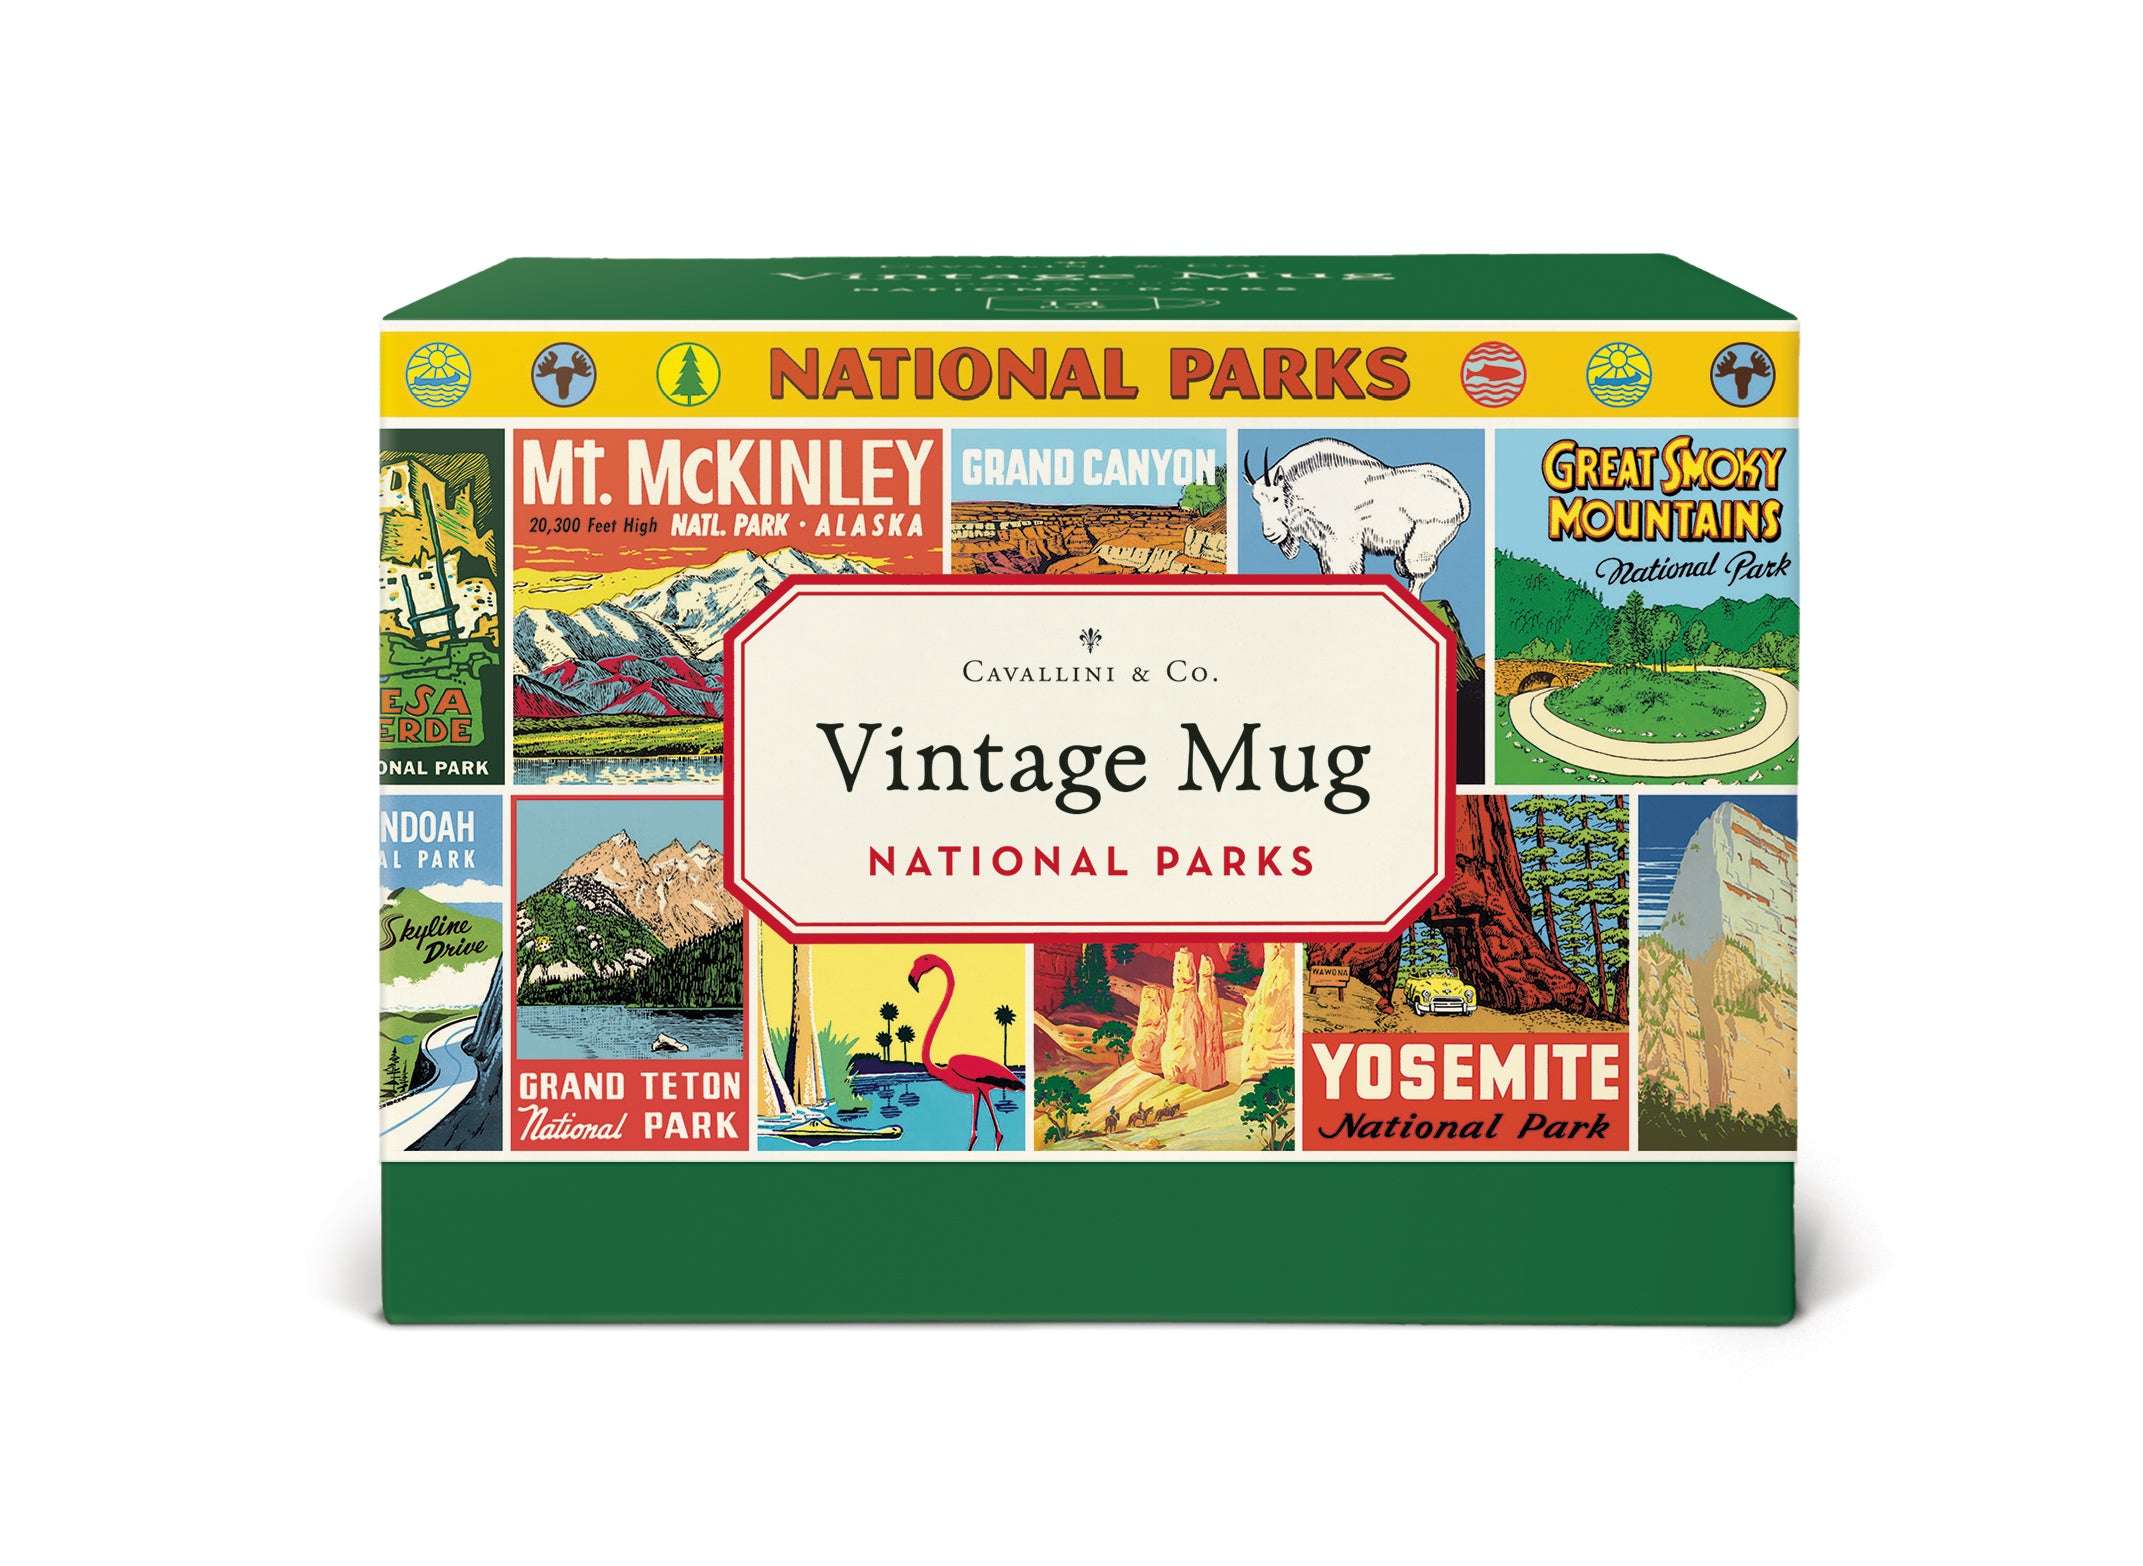 image of Cavallini & Co. National Parks Ceramic Mug packaging